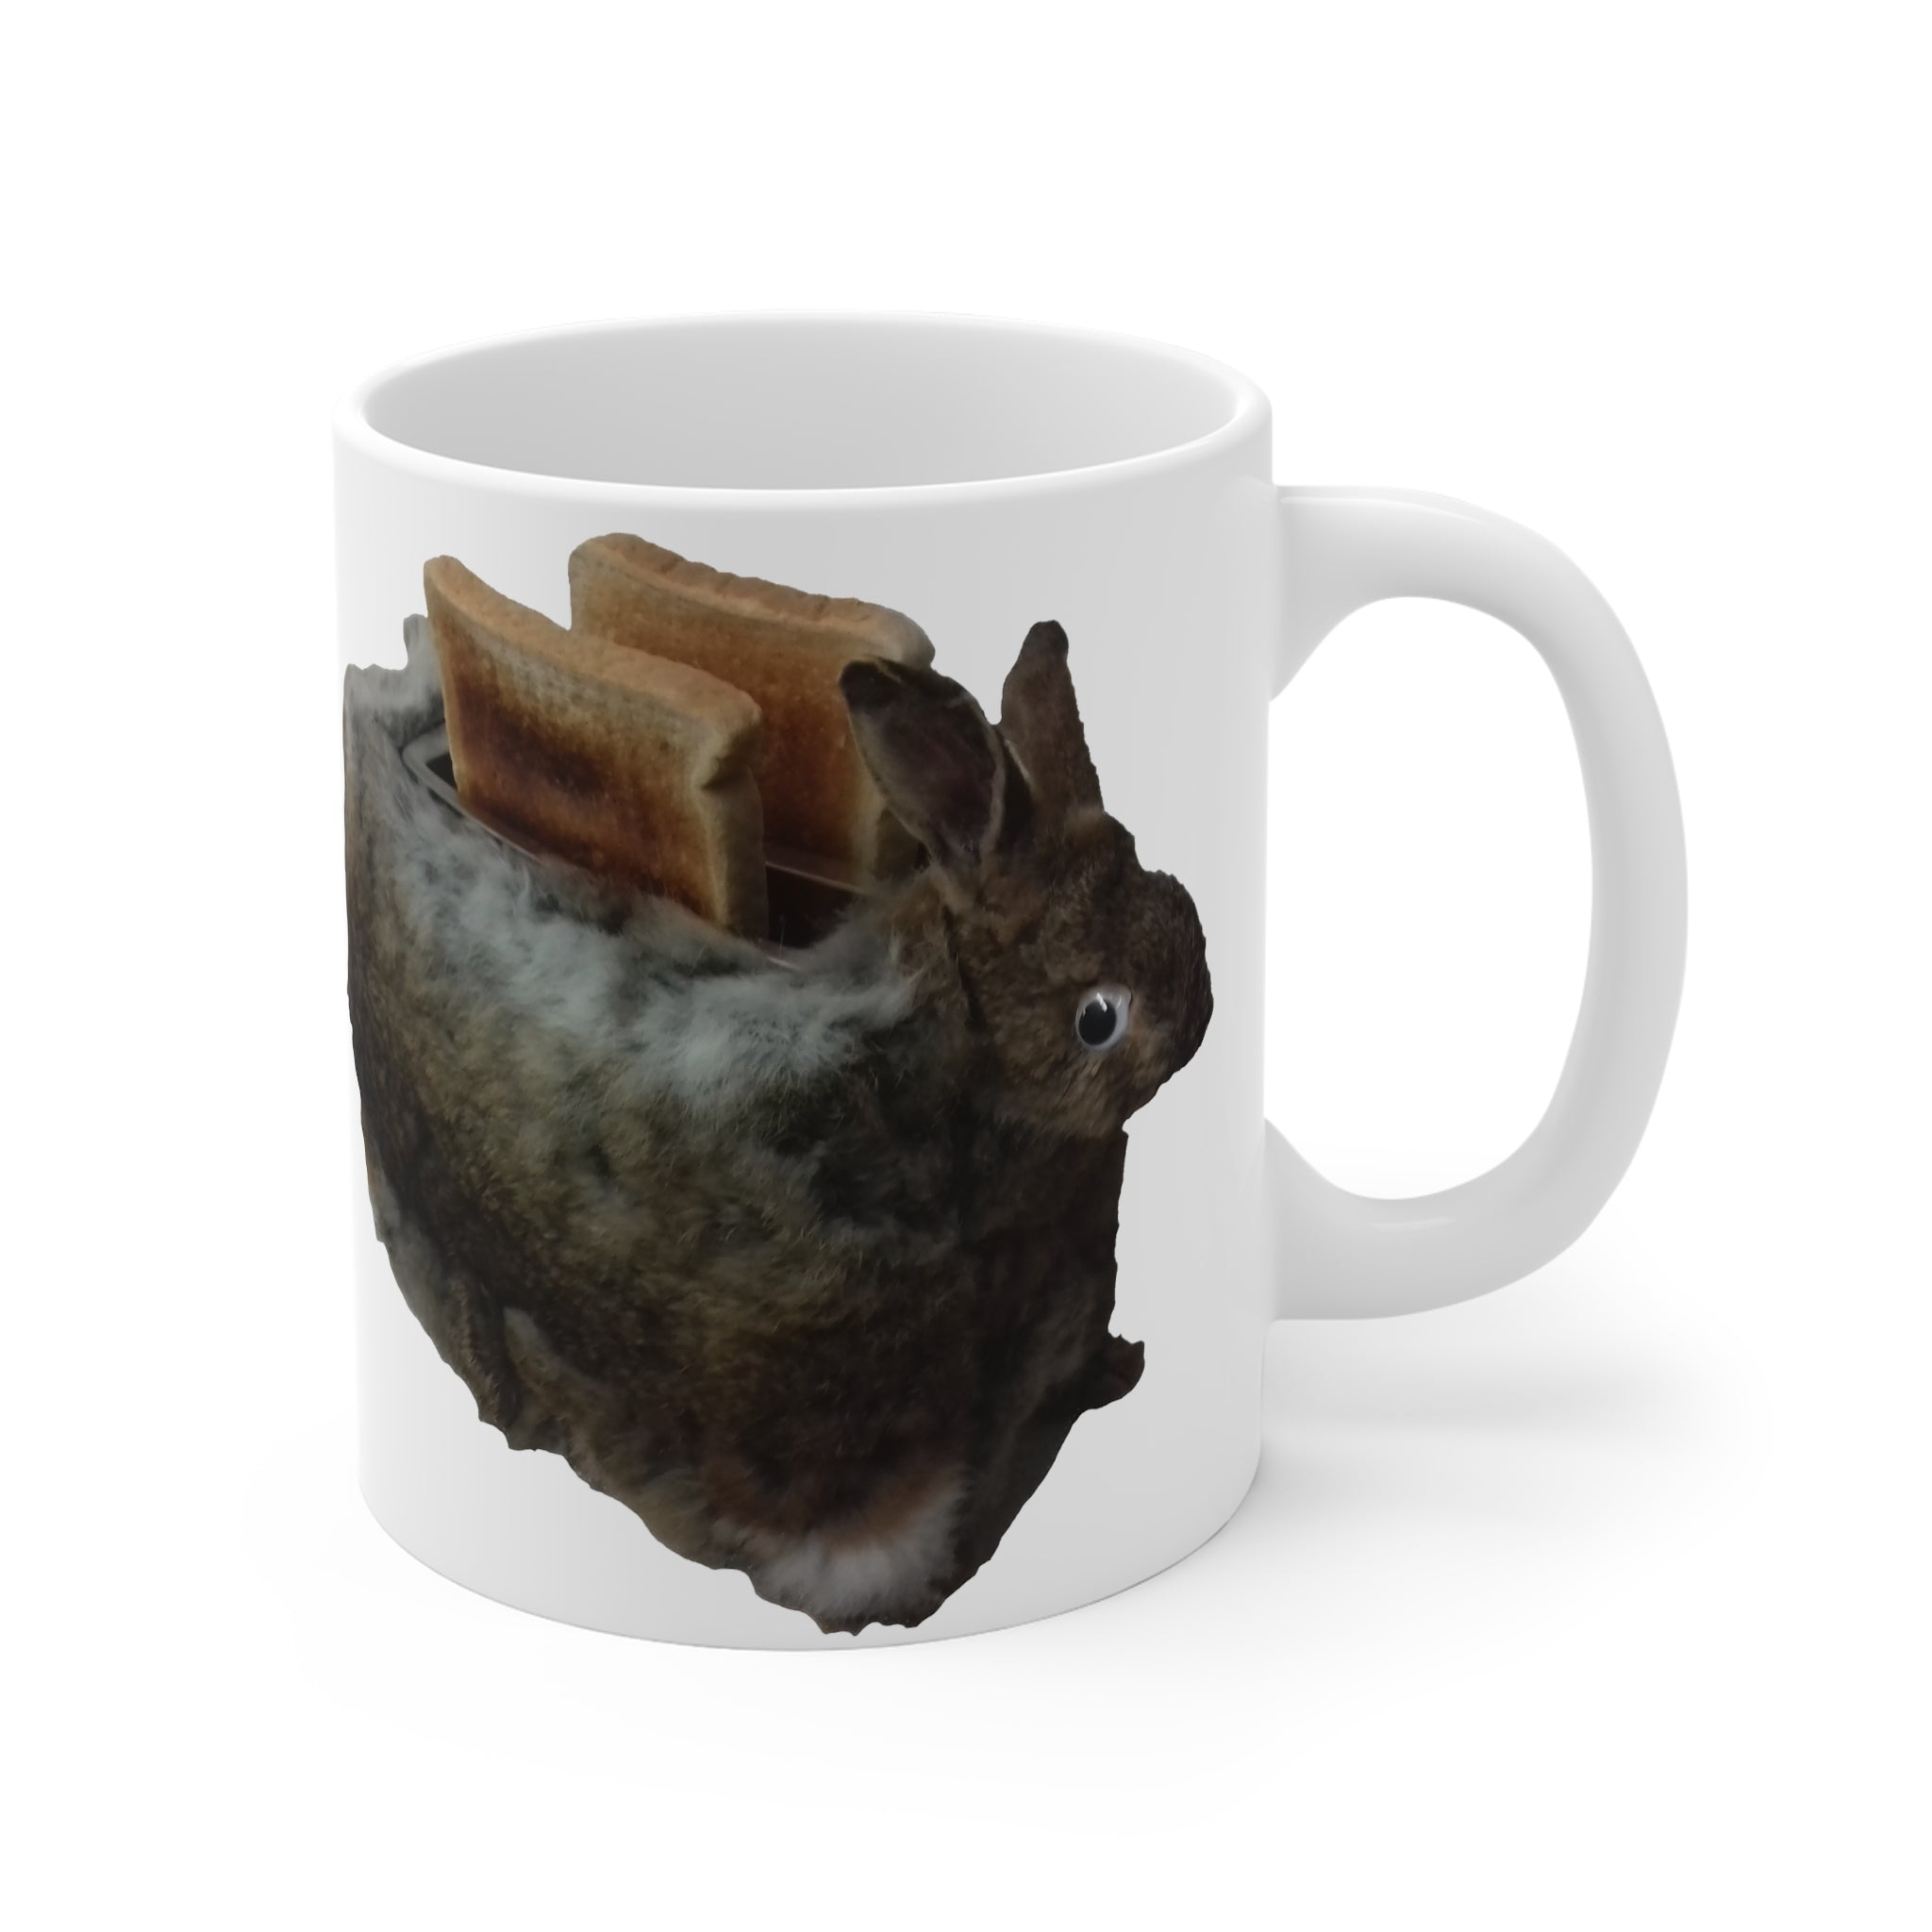 Rabbit Toaster Mug